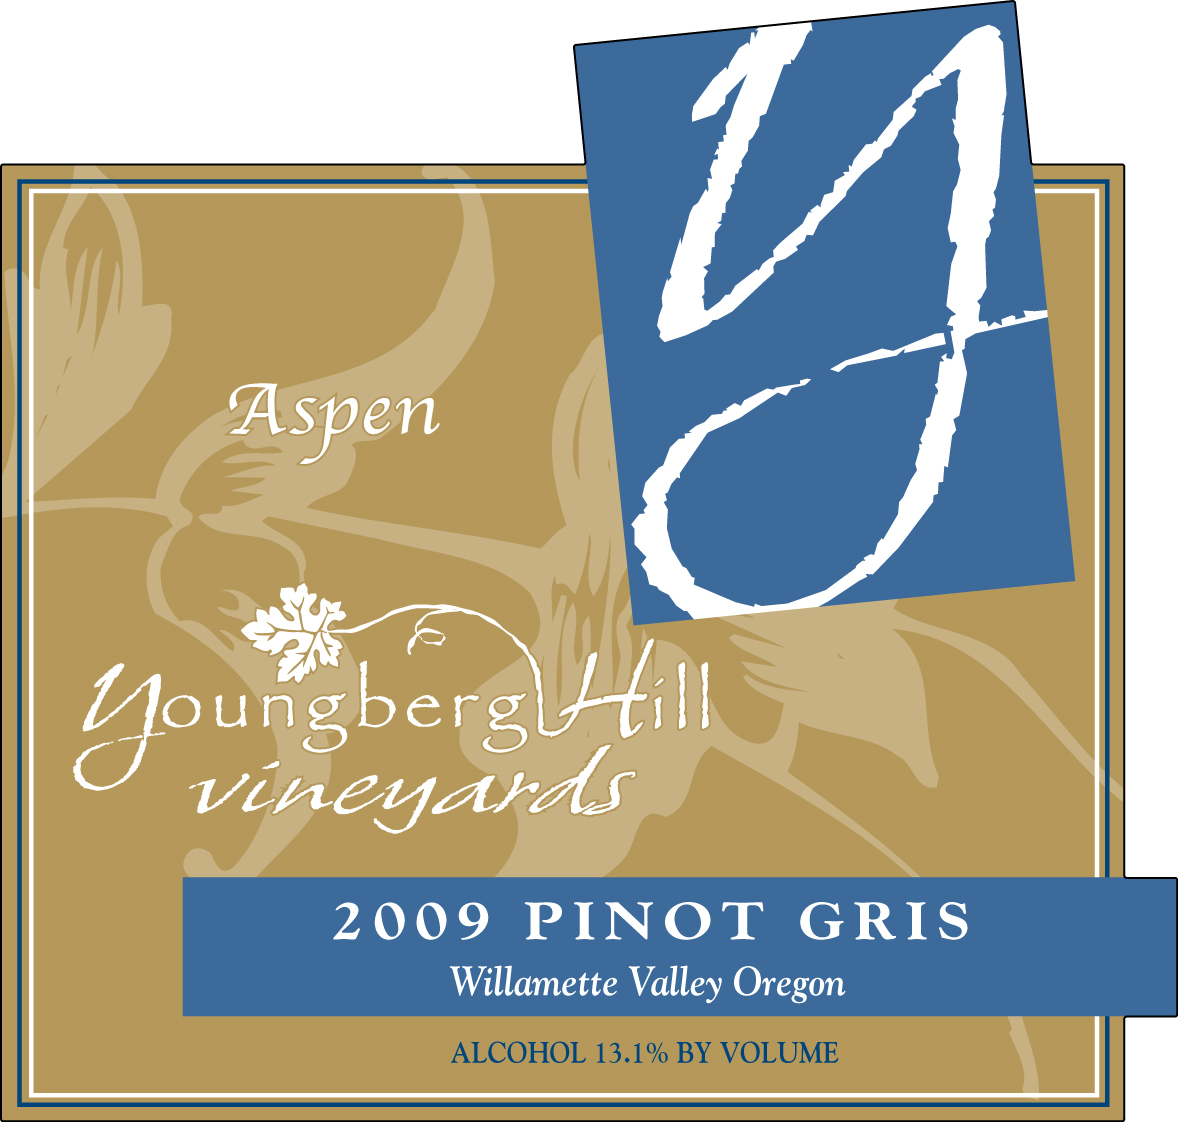 Oregon Wine Releases 1